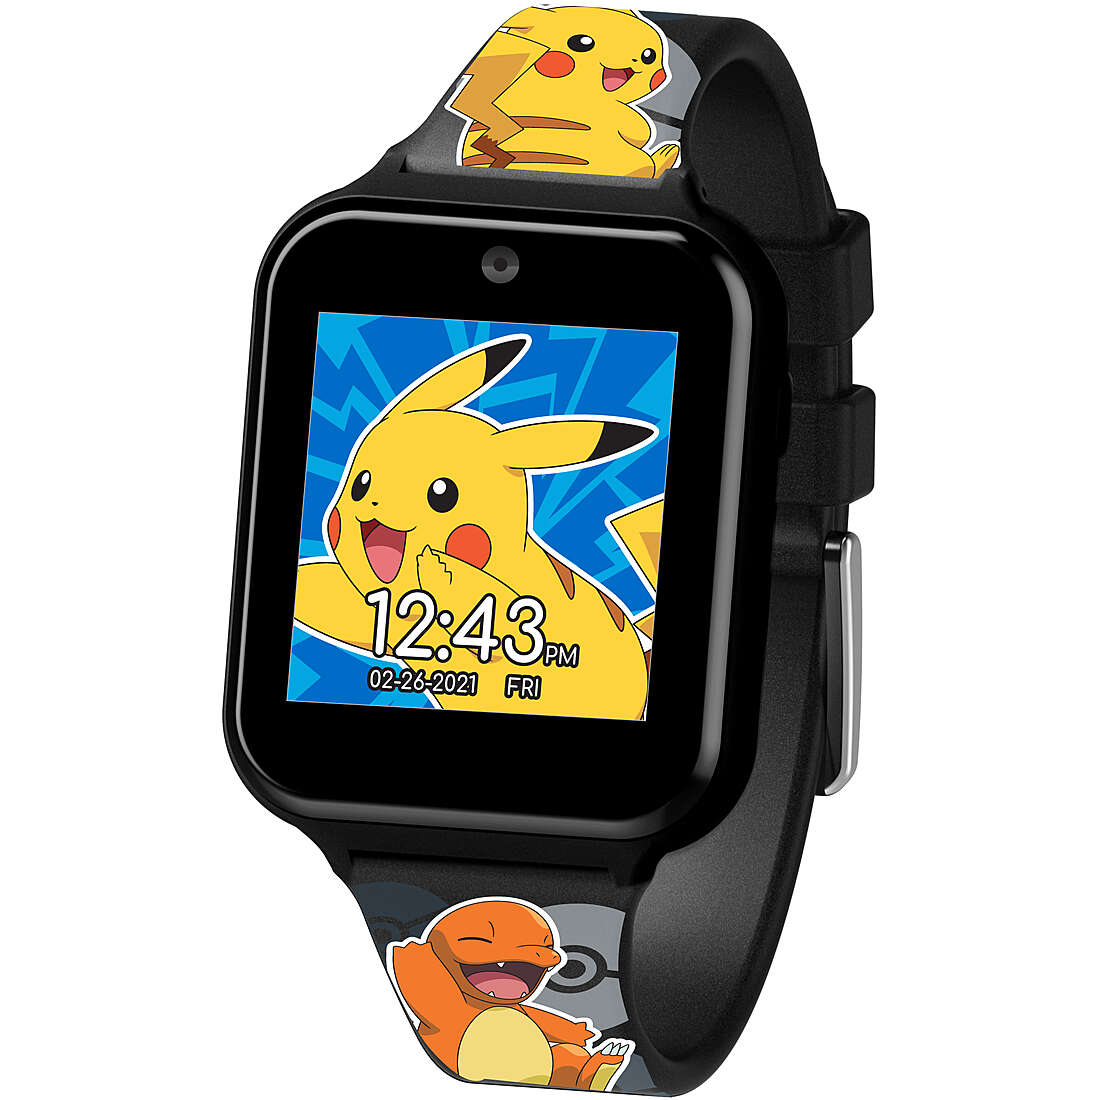 Uhr Smartwatch kind Disney POK4231